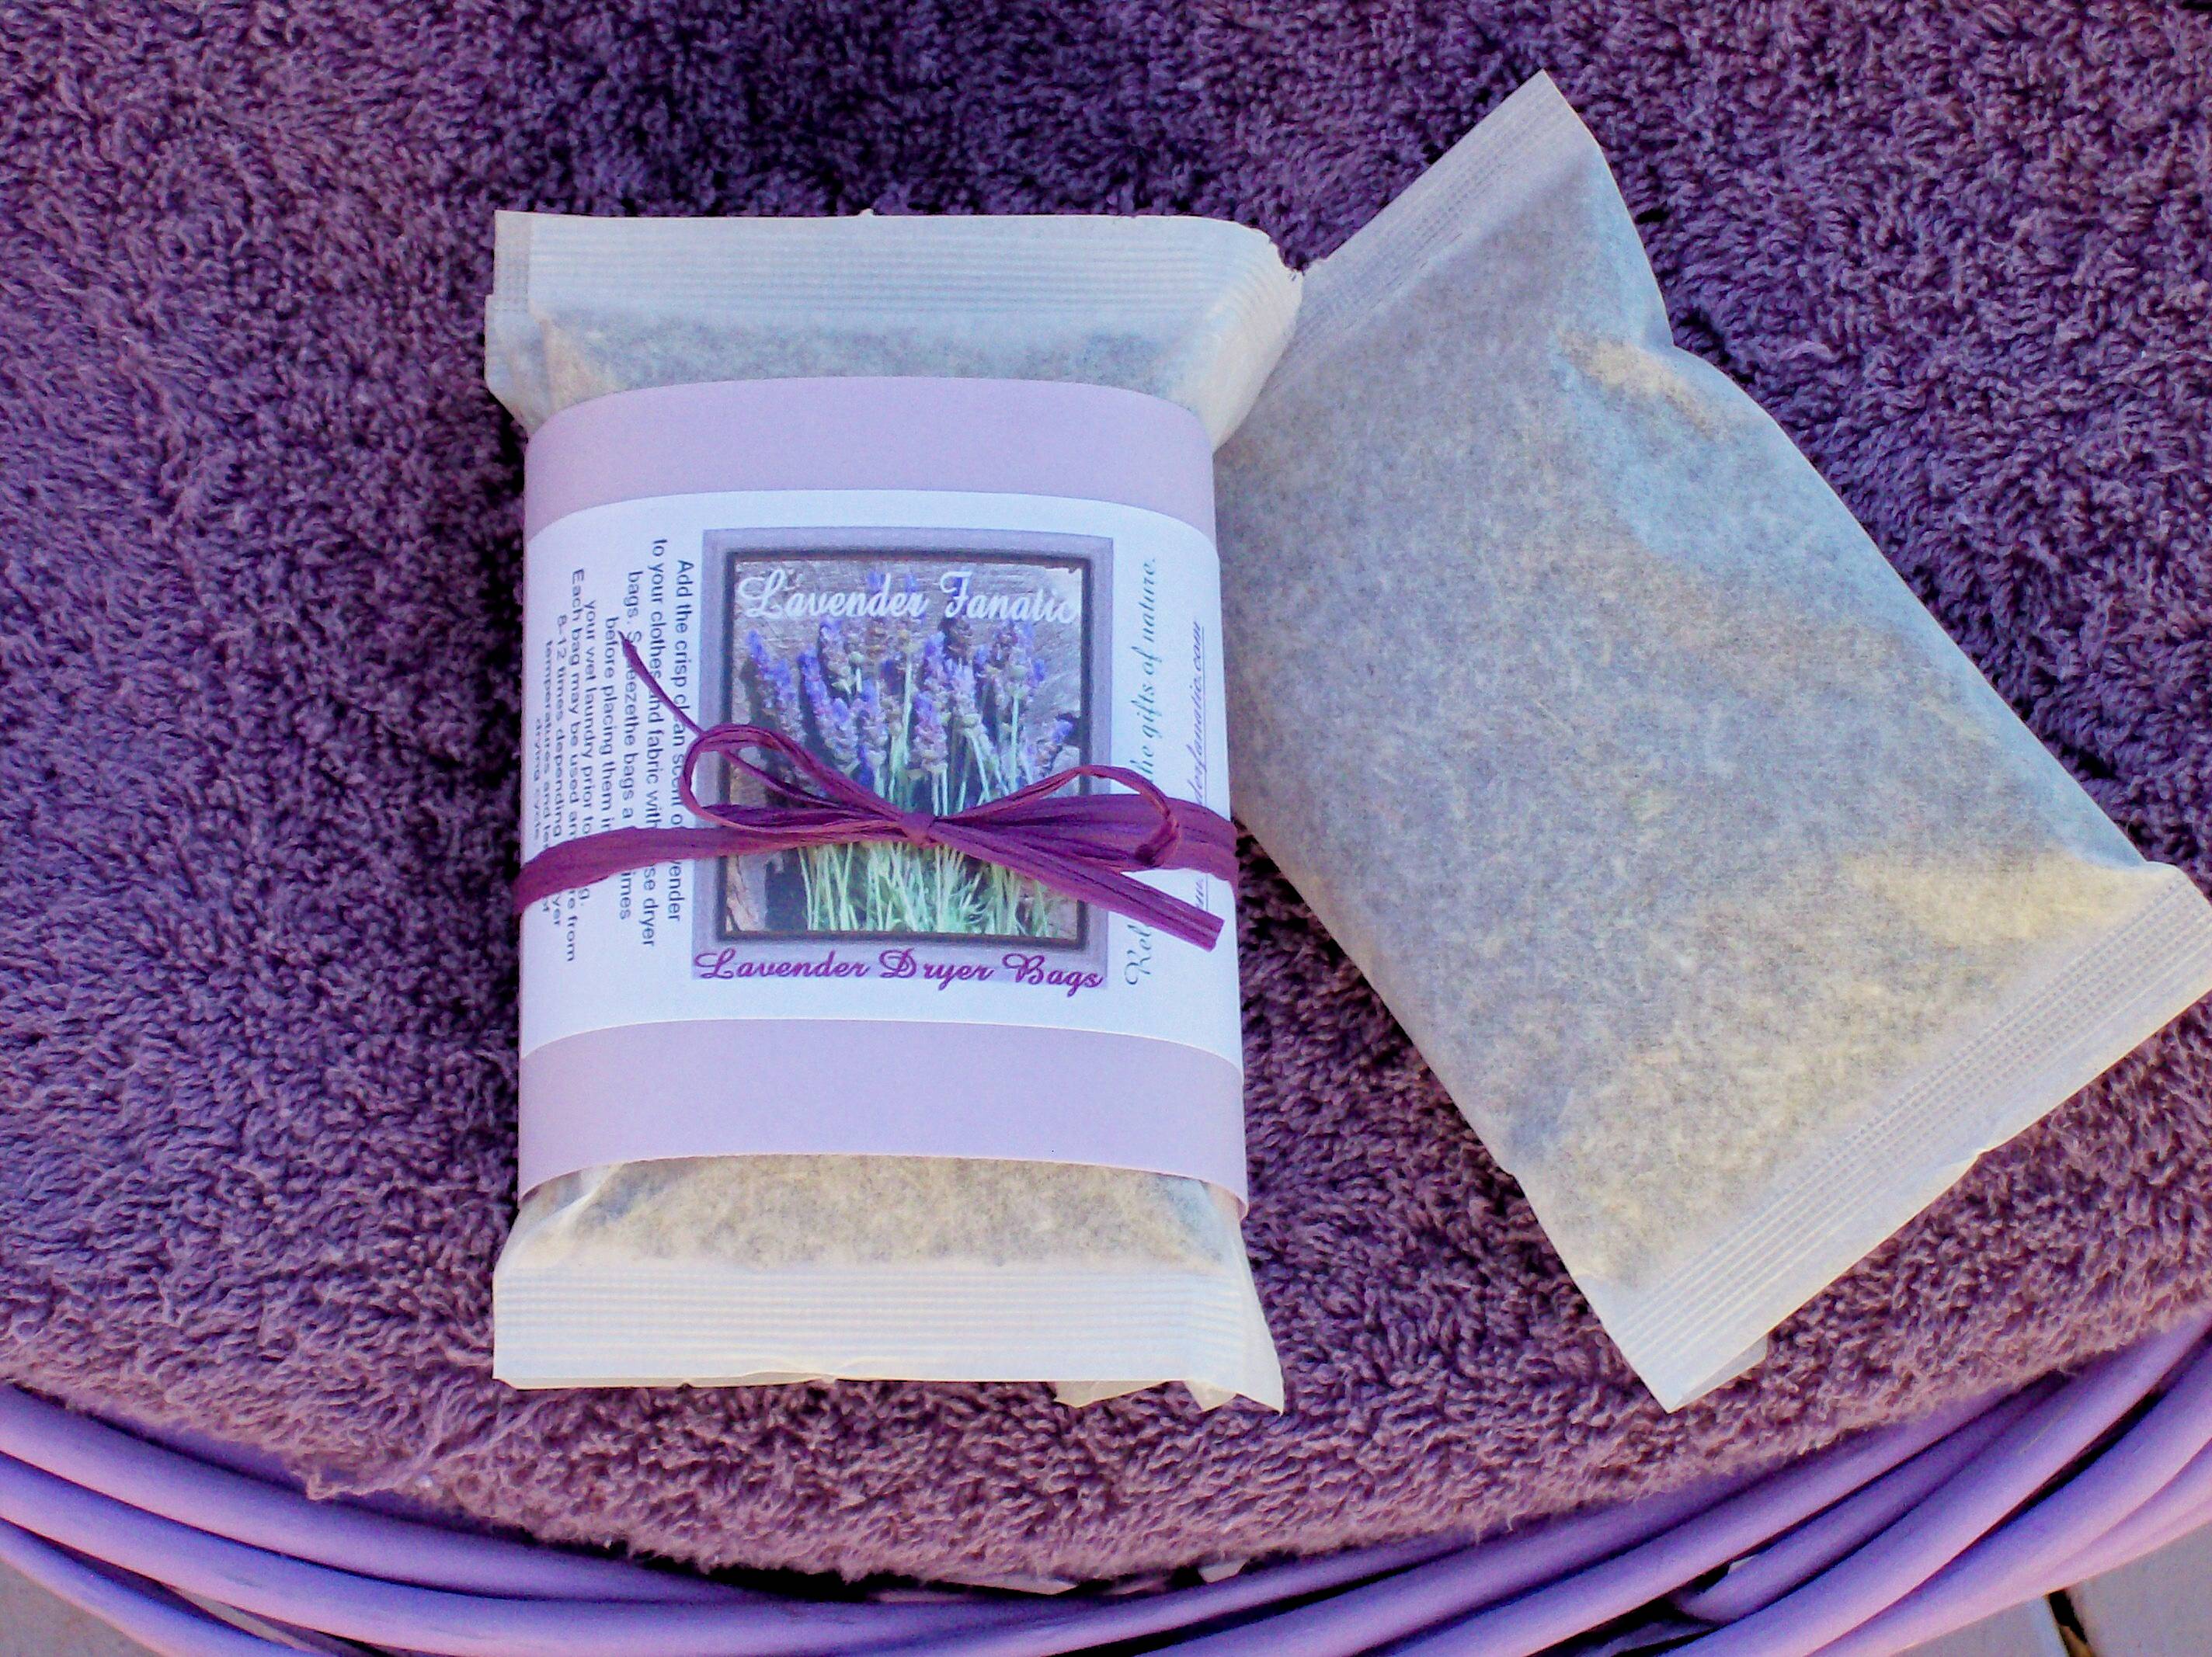 Lavender dryer bags by Lavender Fanatic.